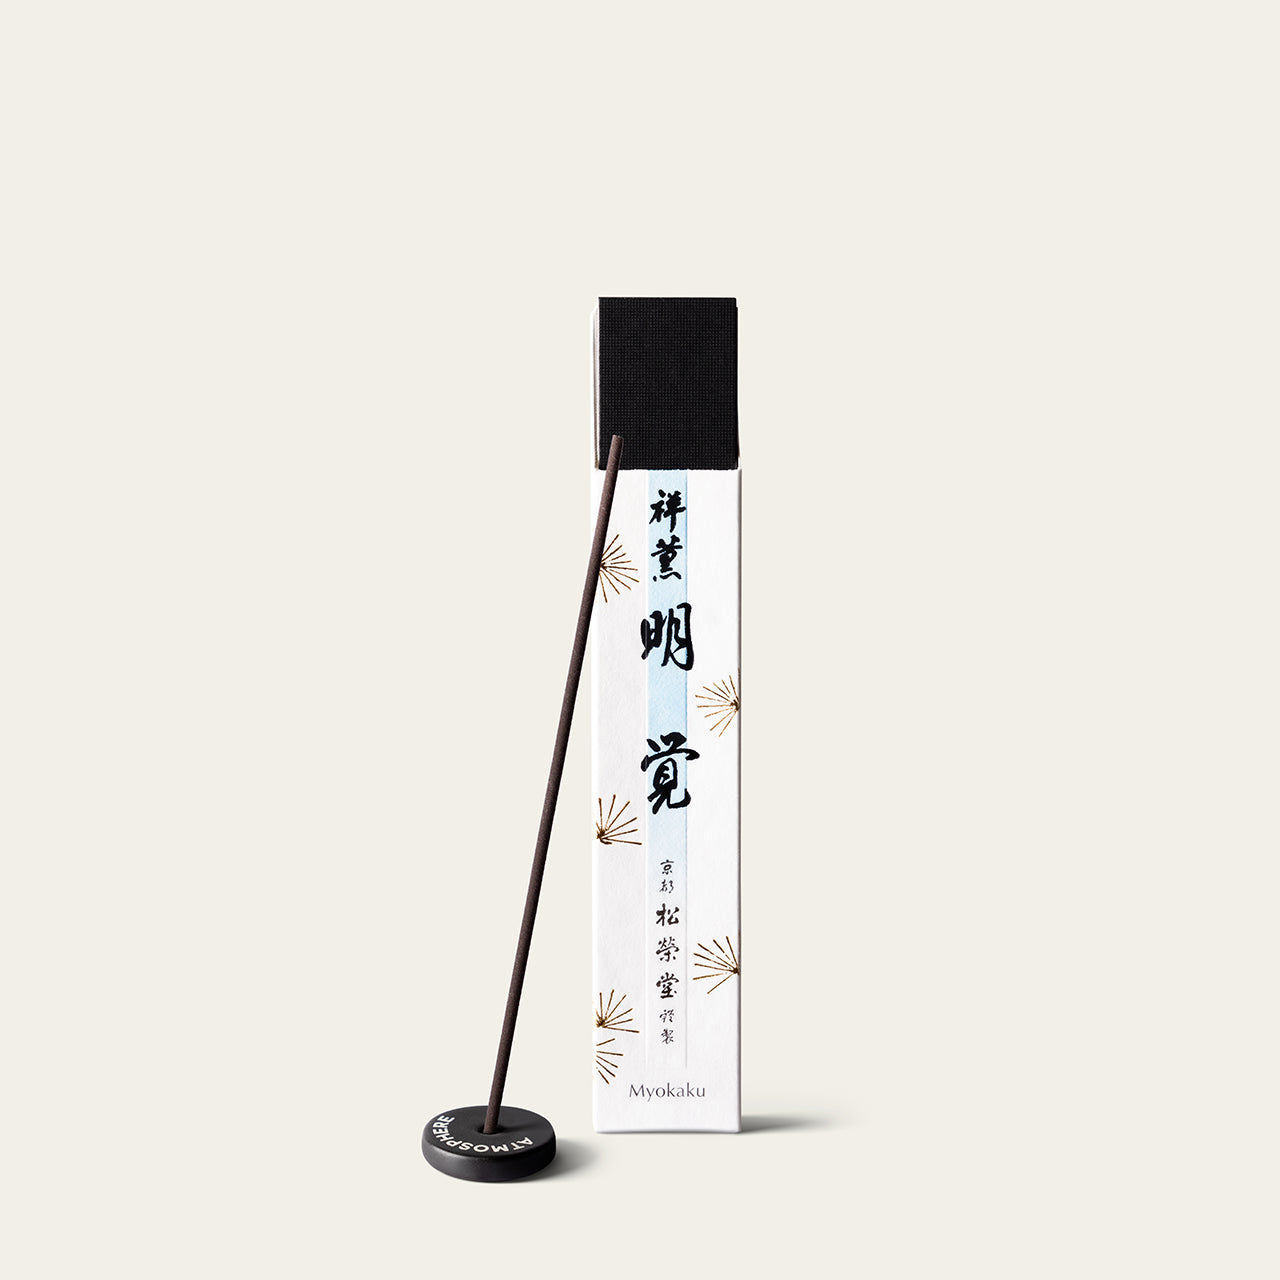 Shoyeido Premium Enlightenment Myokaku Japanese incense sticks (15 sticks) with Atmosphere ceramic incense holder